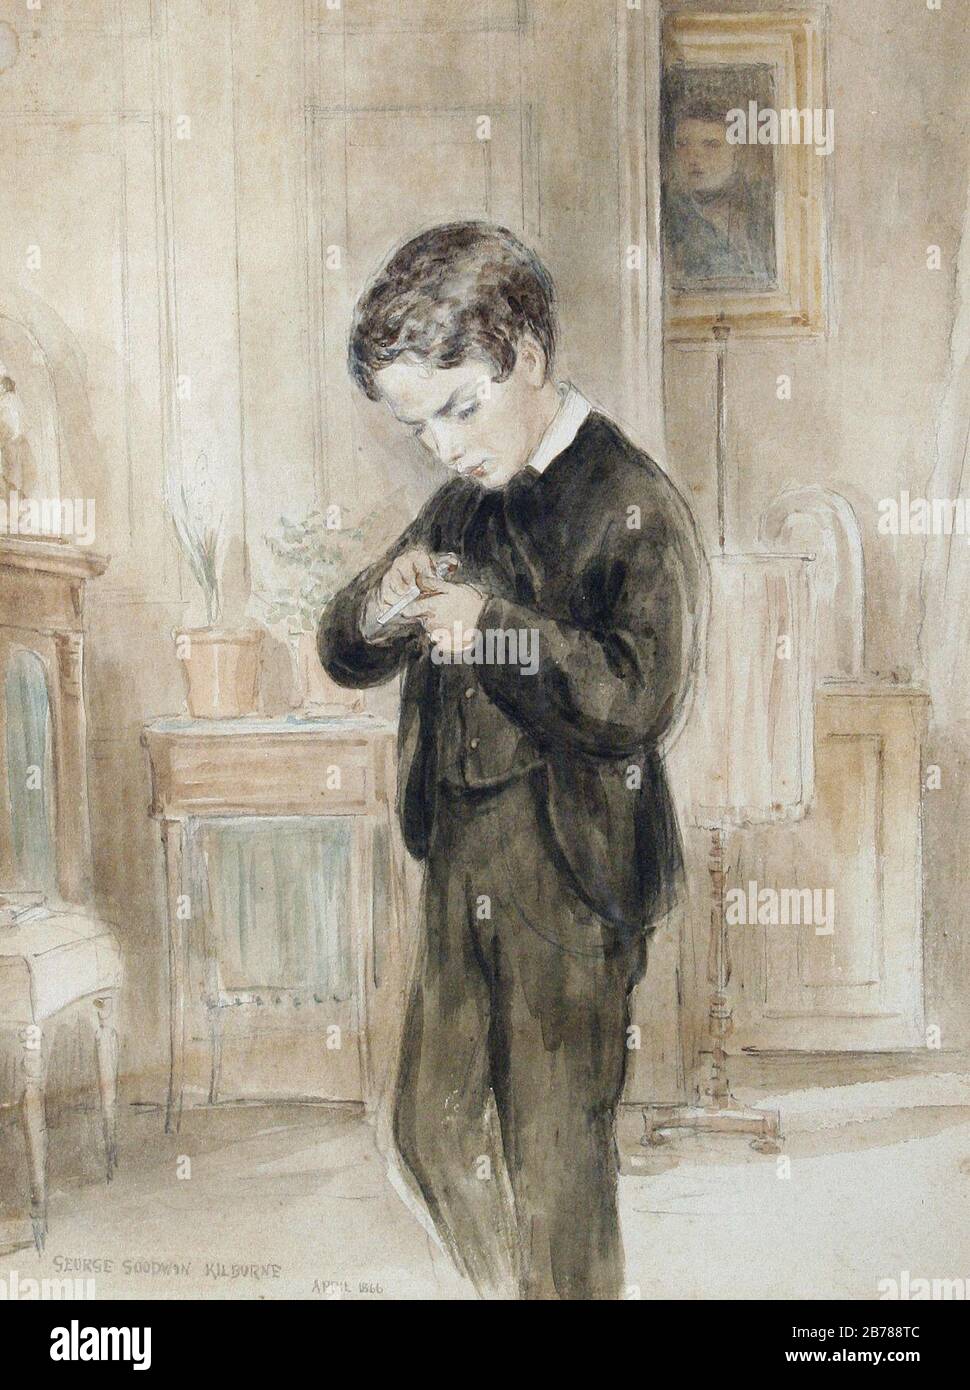 George Goodwin Kilburne Eton schoolboy. Stock Photo